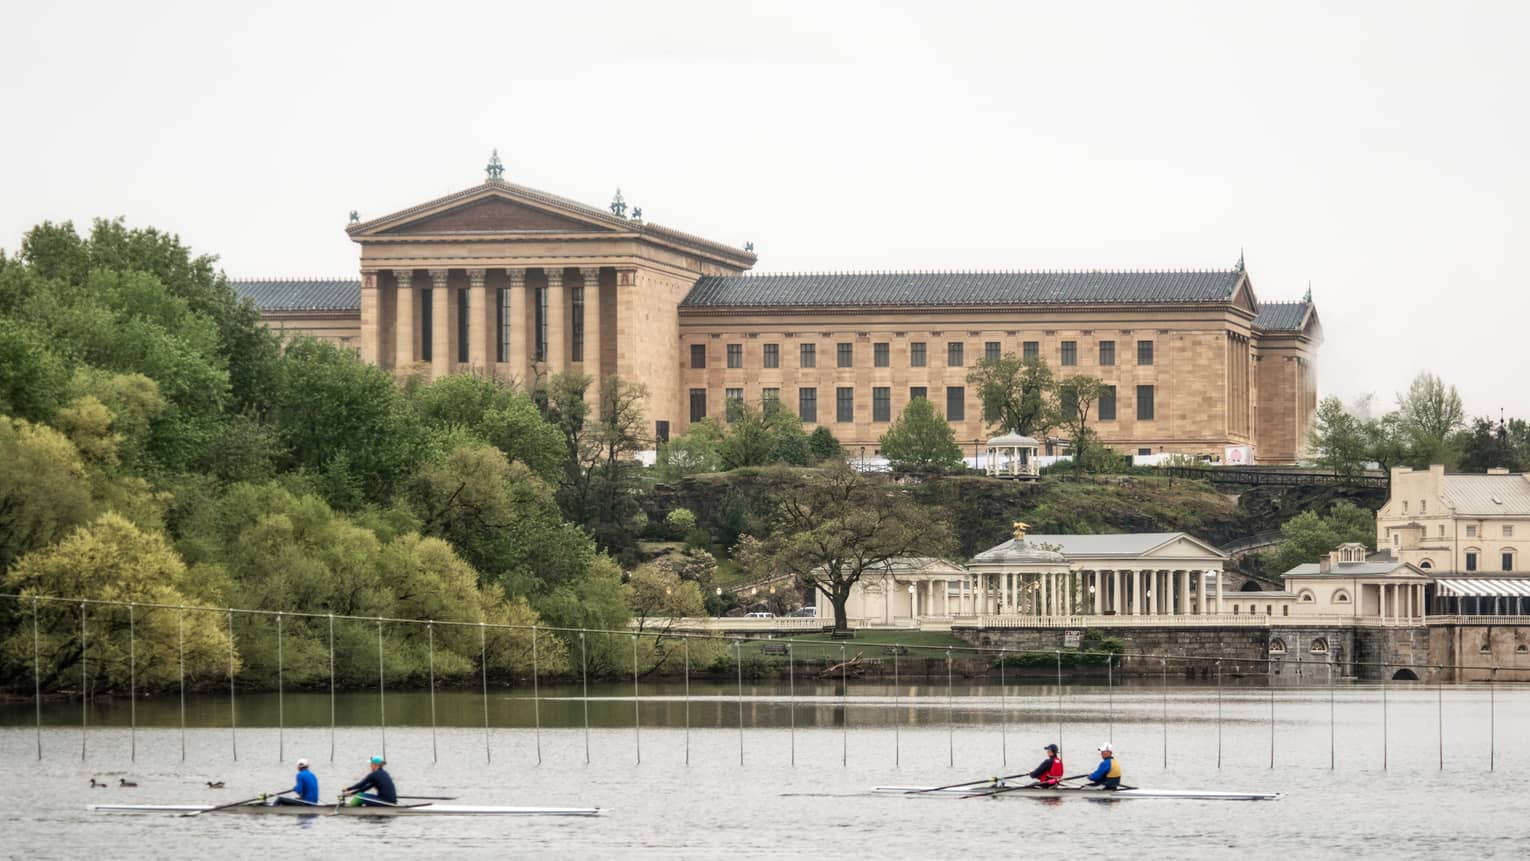 Kayakers row down river past historic buildings in Philadelphia